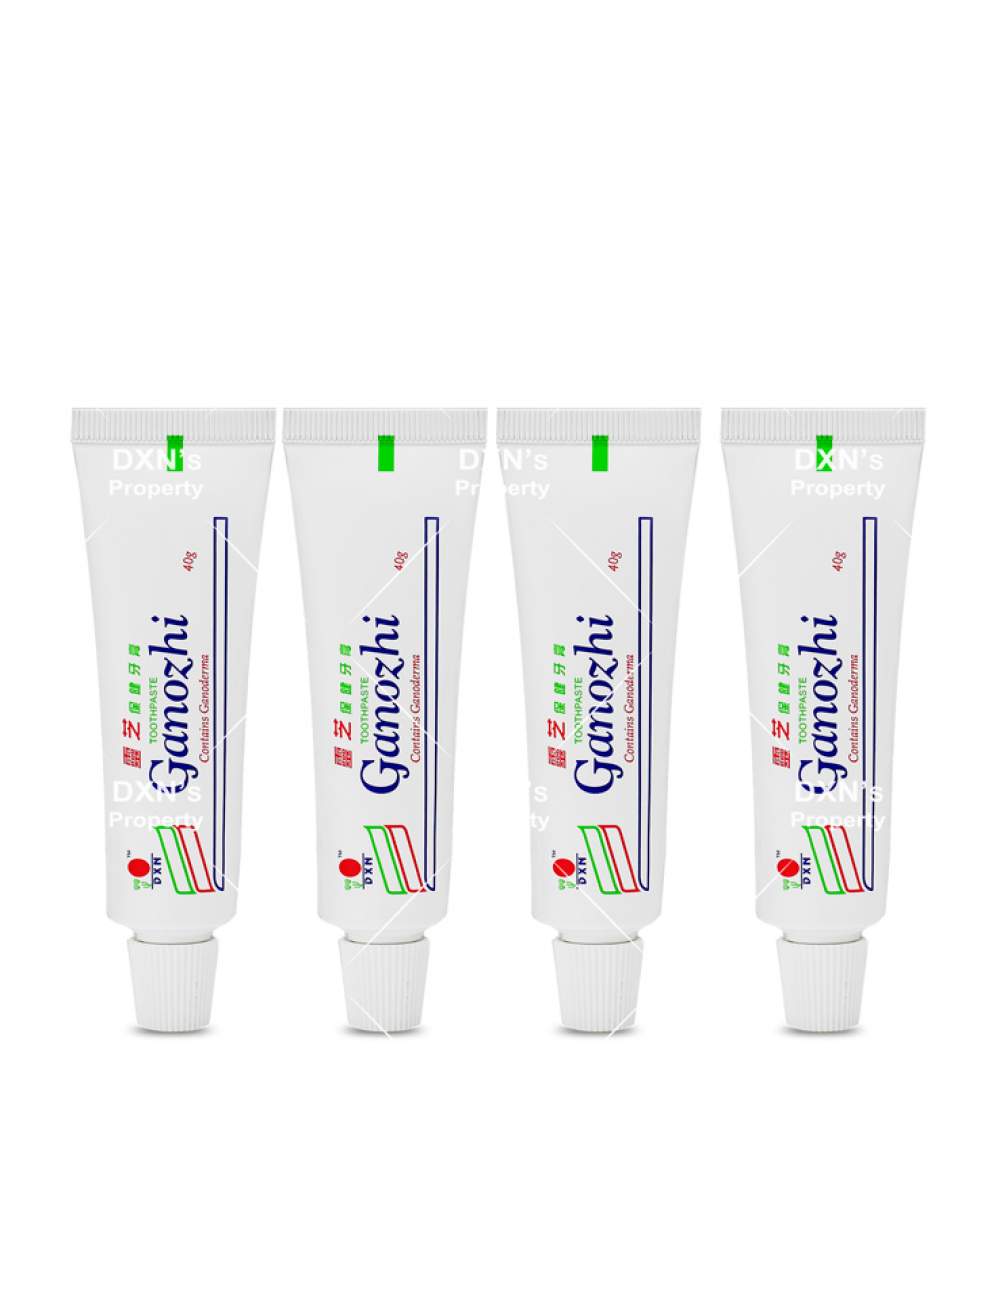 DXN Ganozhi Toothpaste (4x40g)